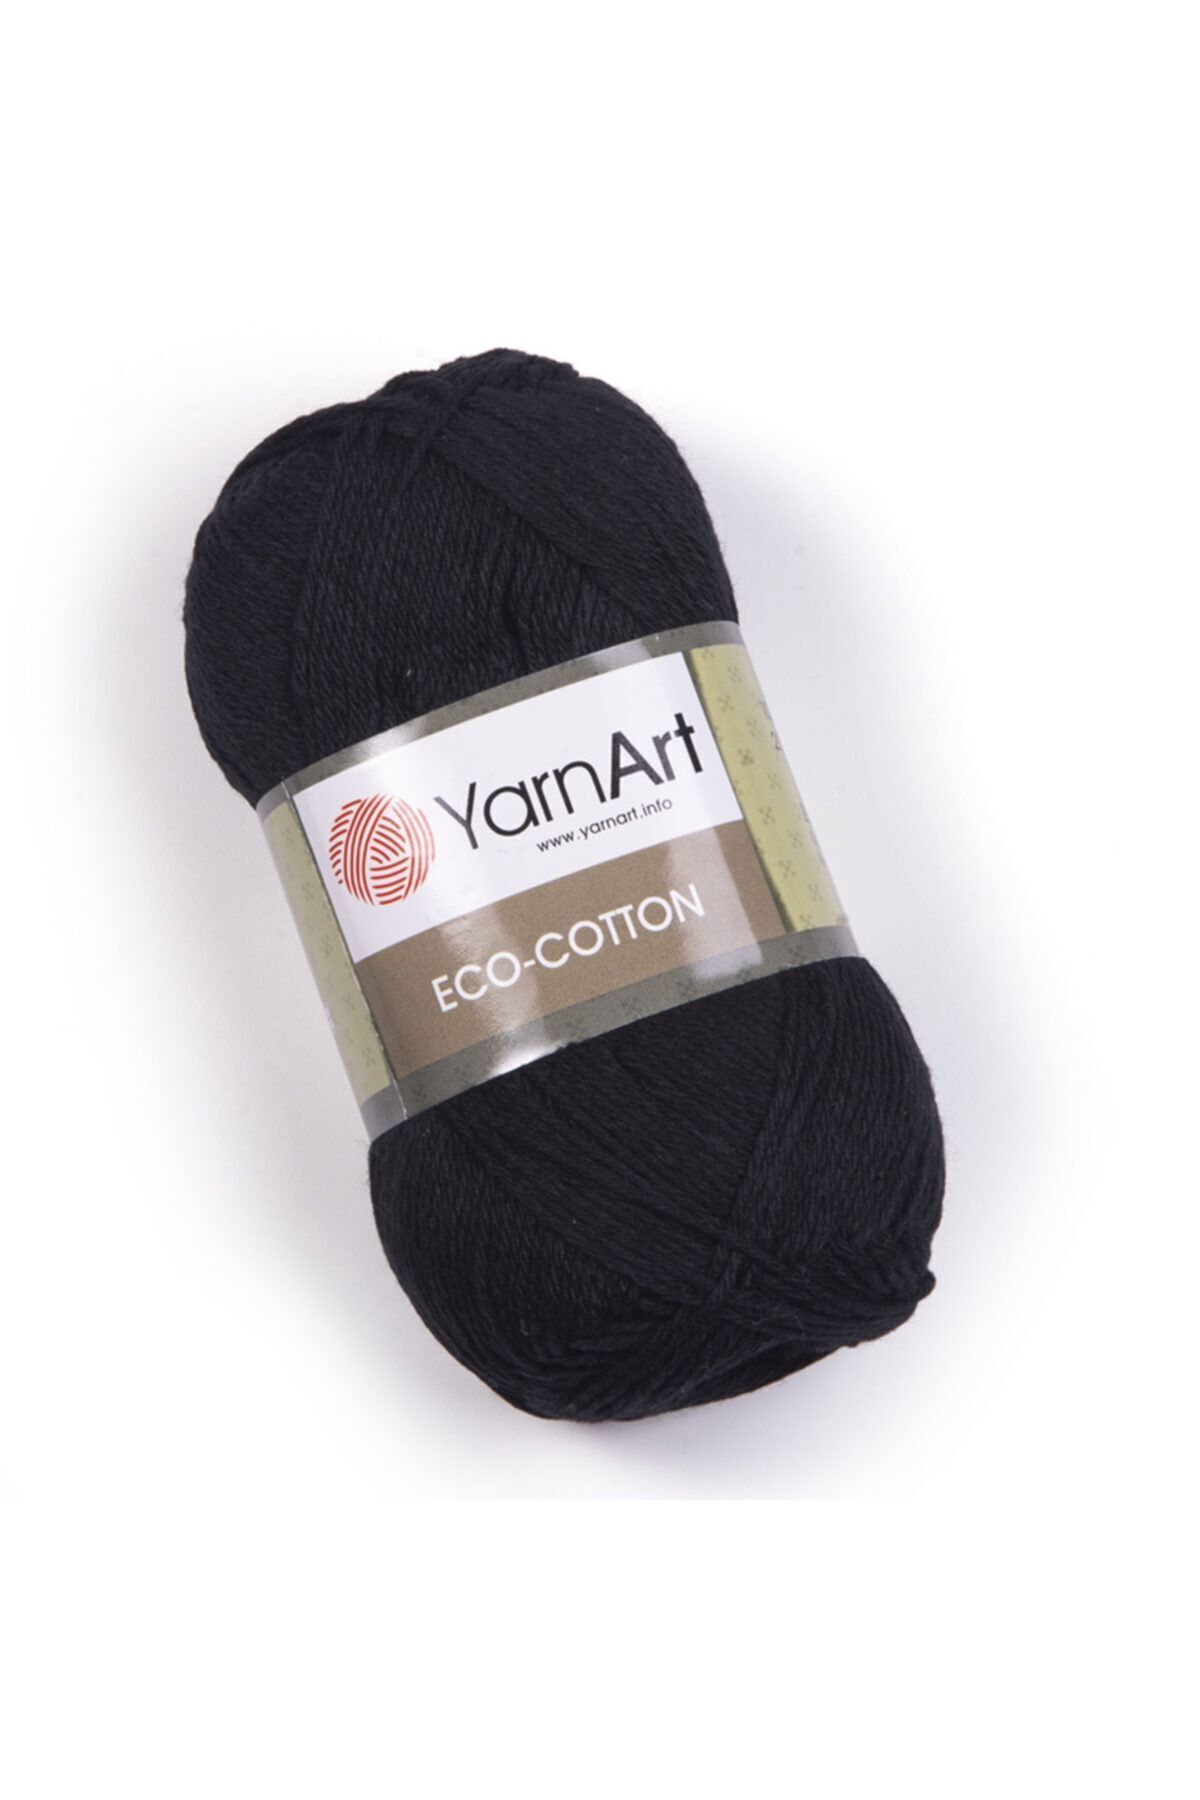 Yarnart Eco Cotton - El Örgü Ipi Siyah-761